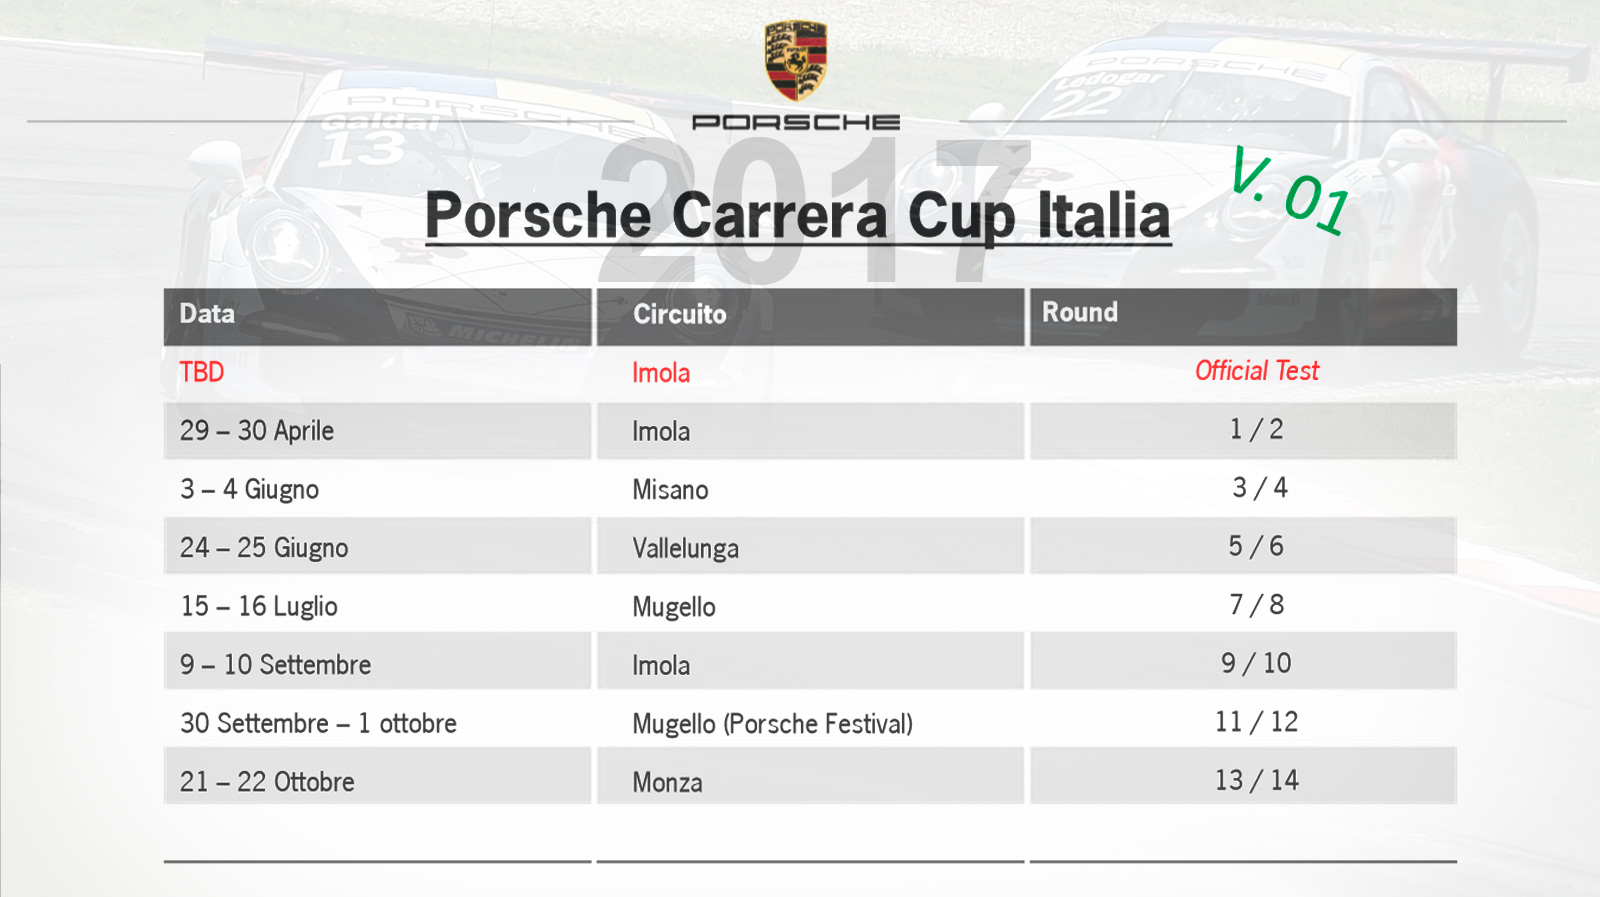 Porsche Carrera Cup Italia Calendar 2017